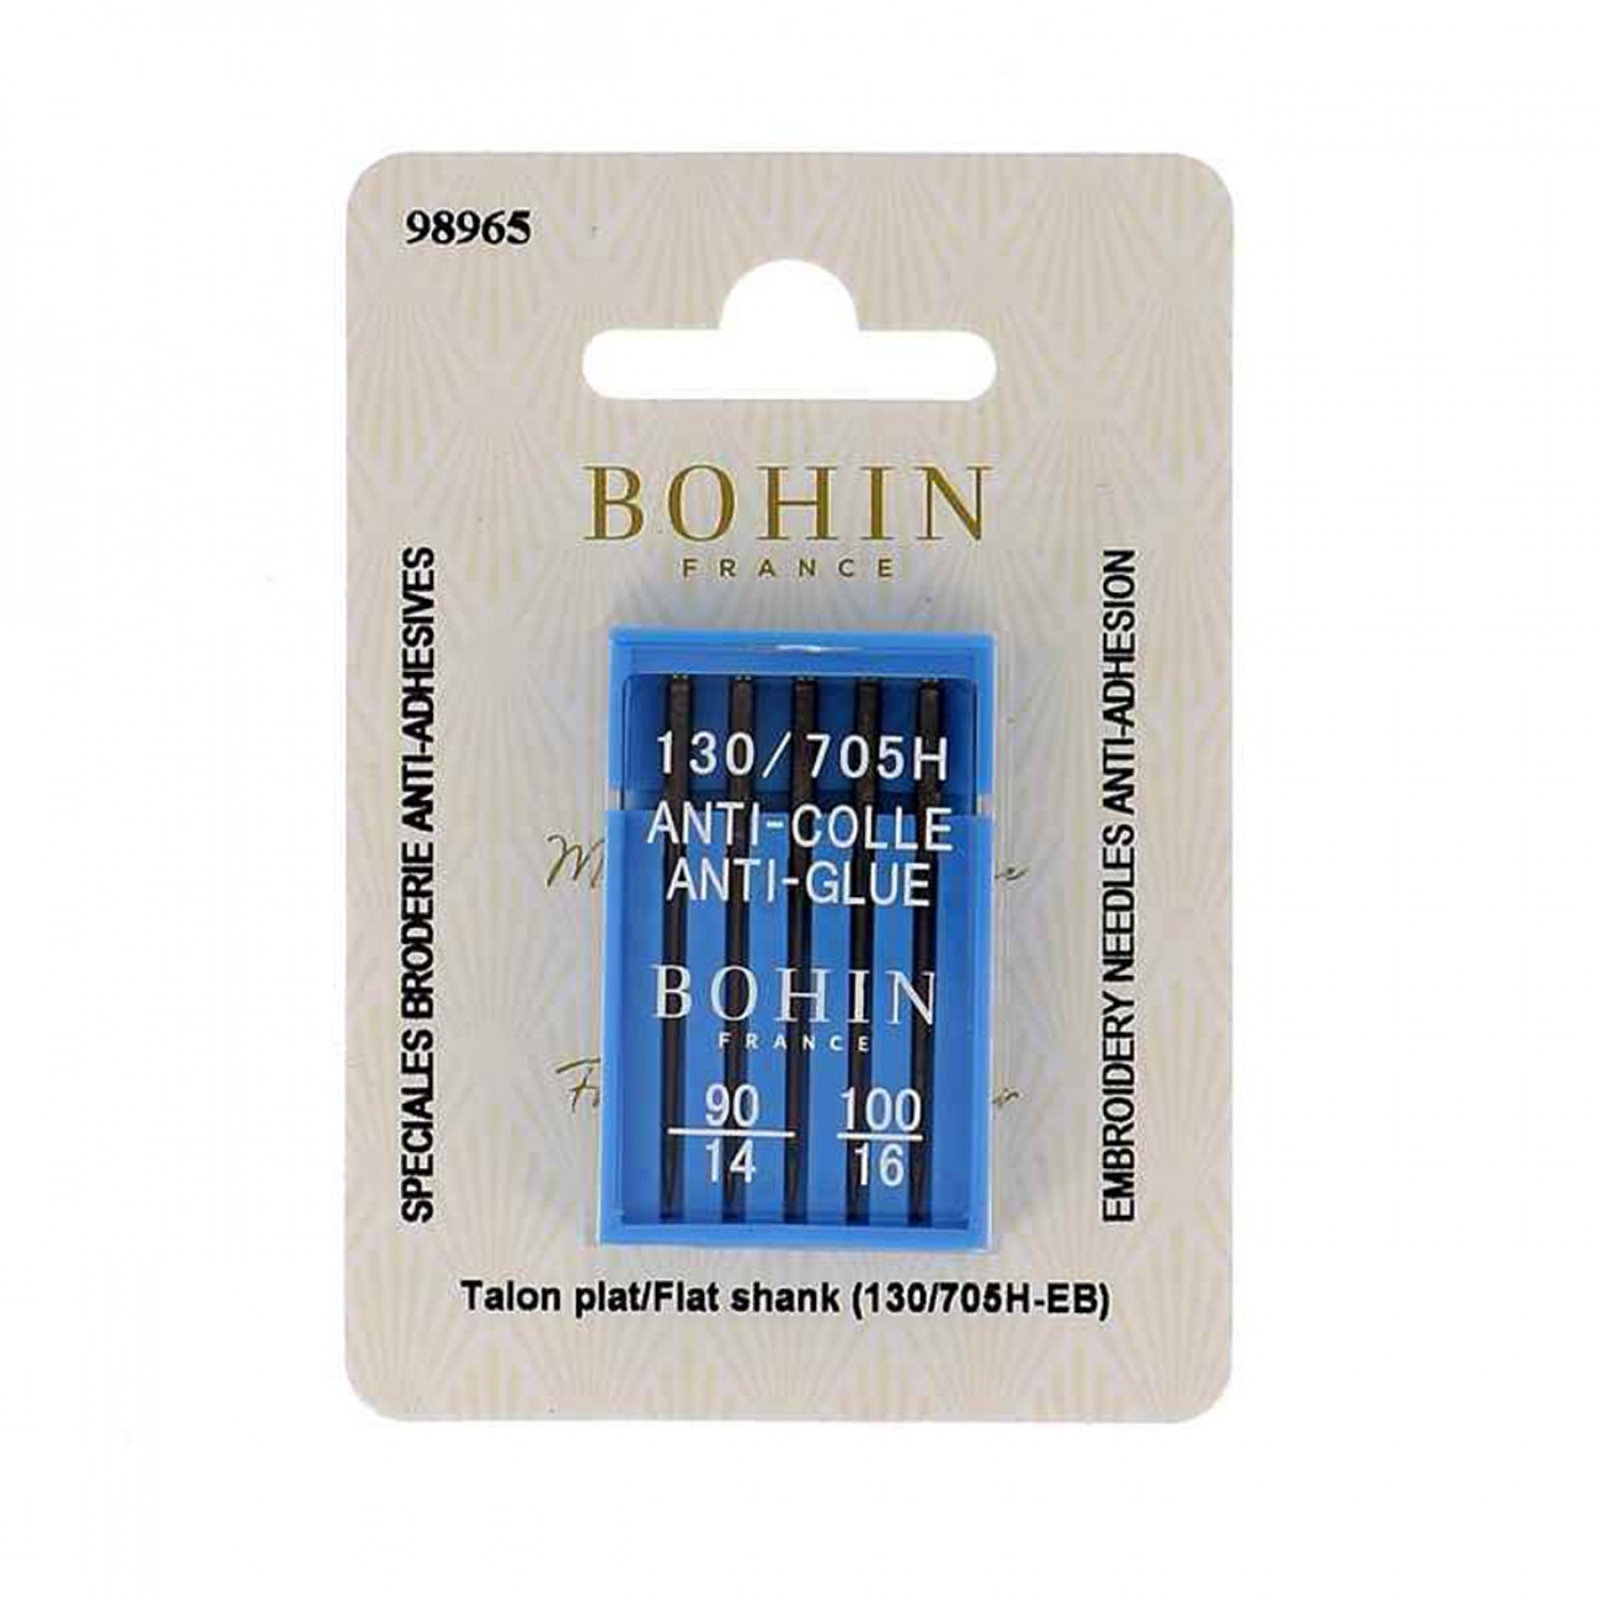 Bohin Anti-Glue Sewing Machine Needles 90/100 Pack of 5